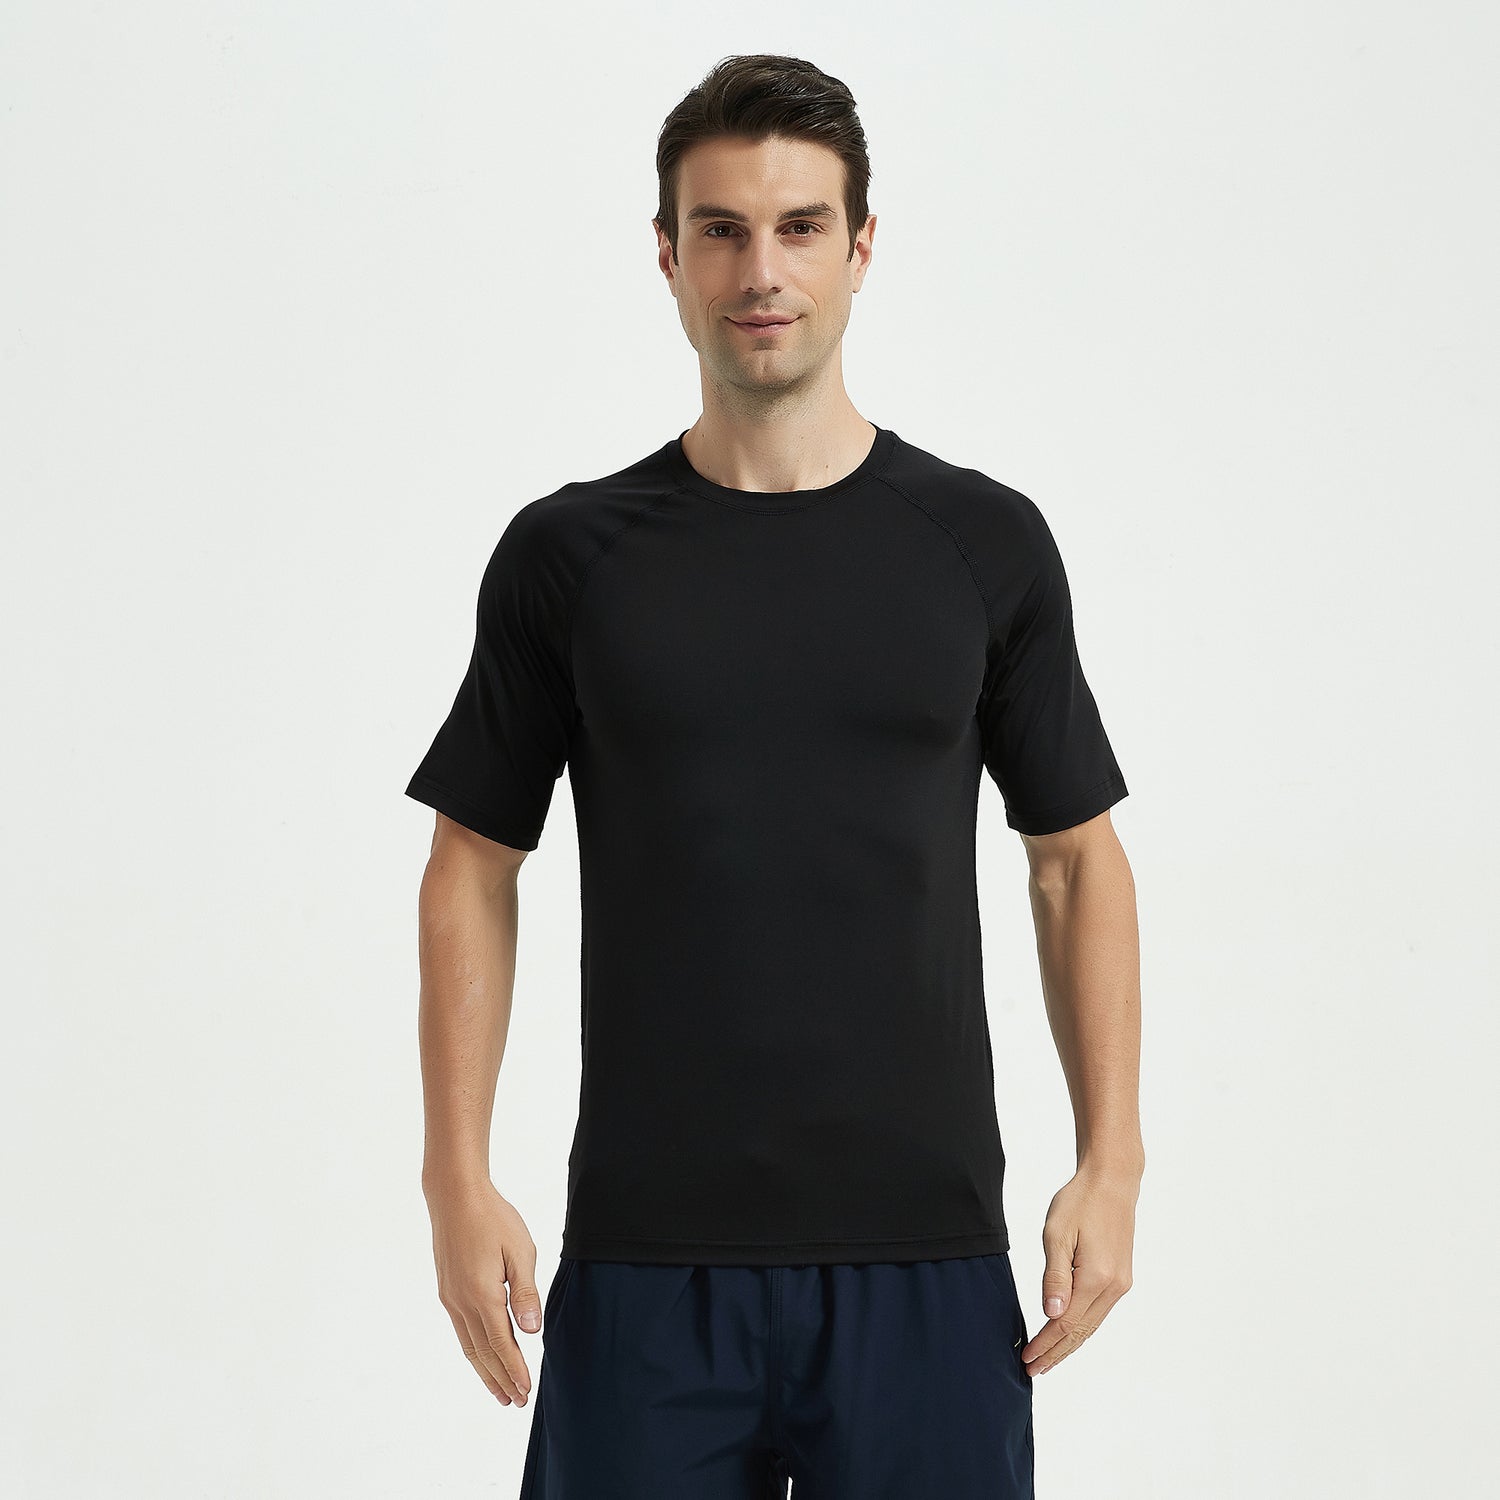 Graphene G-Tech T-Shirt – Wear Graphene